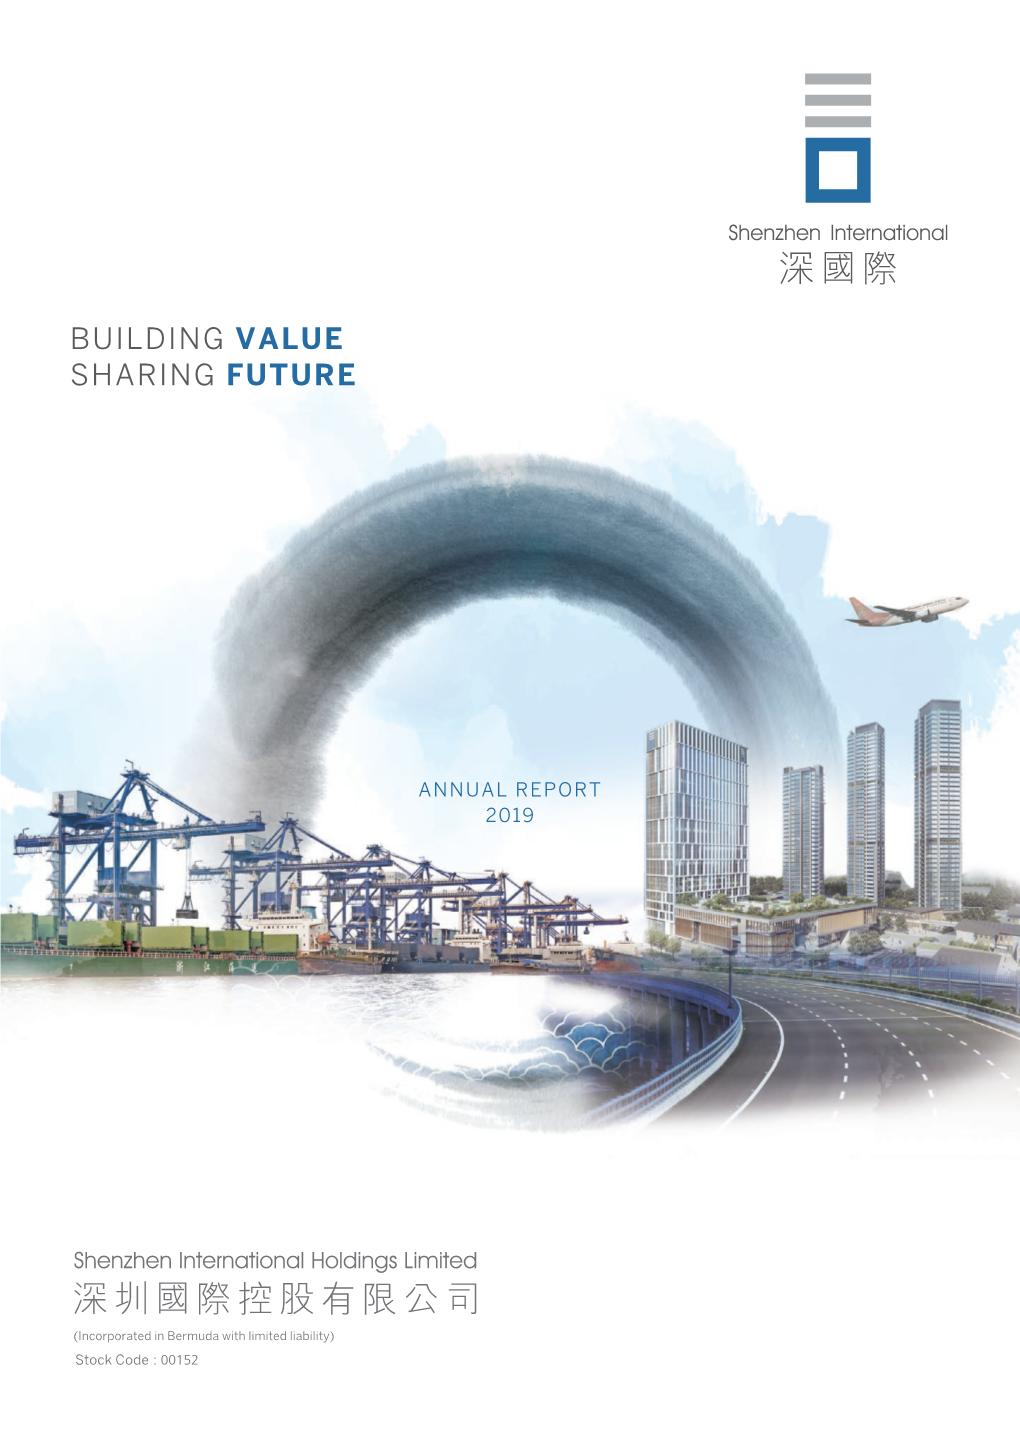 Annual Report 2019 BUILDING VALUE